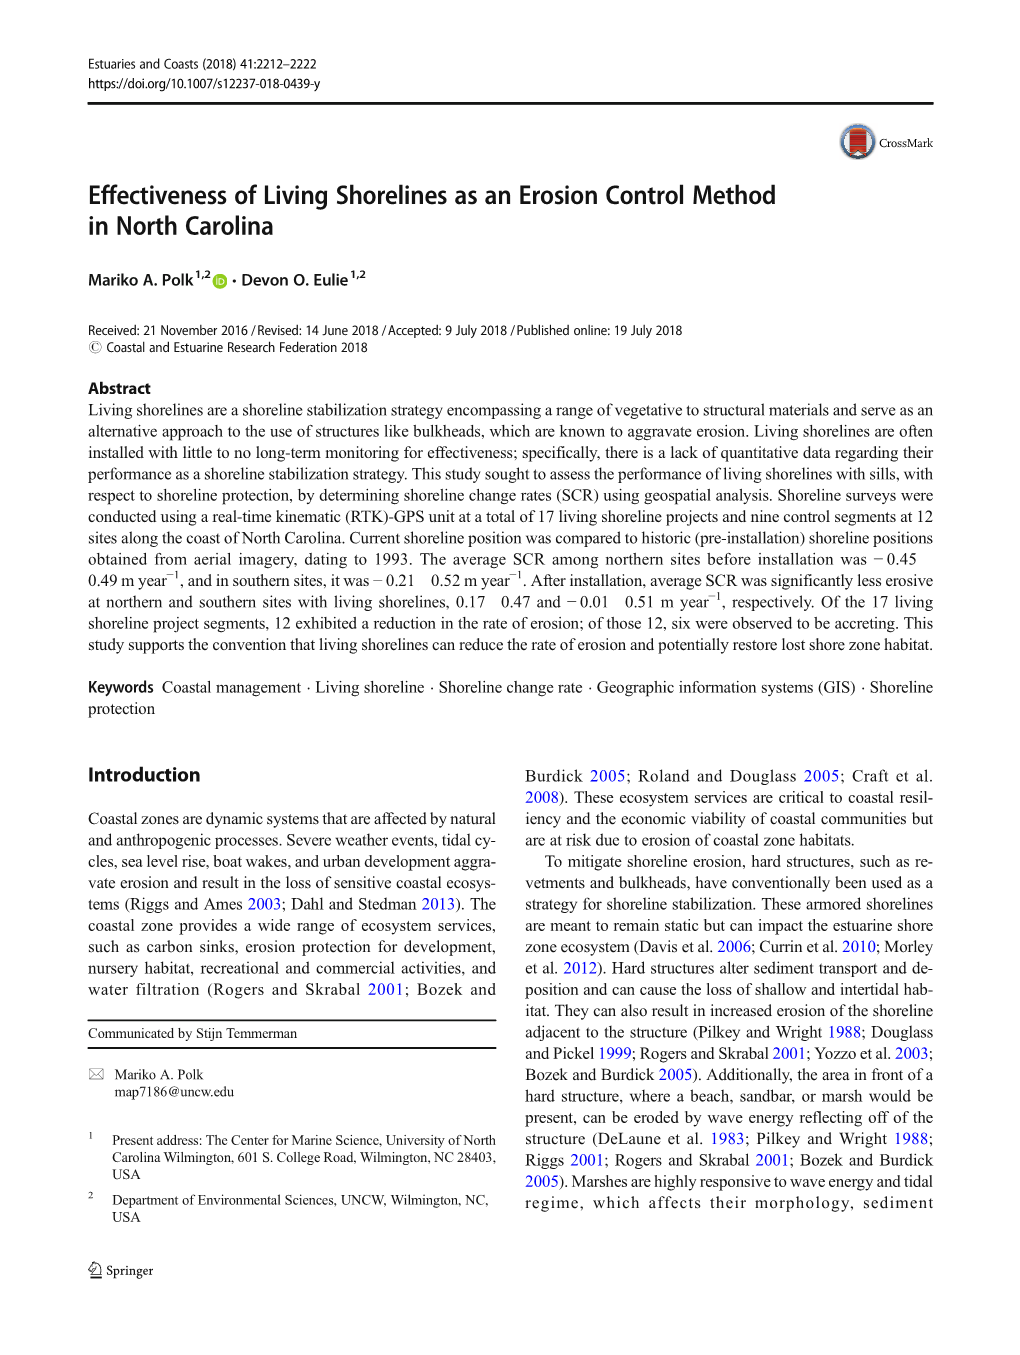 Effectiveness of Living Shorelines As an Erosion Control Method in North Carolina